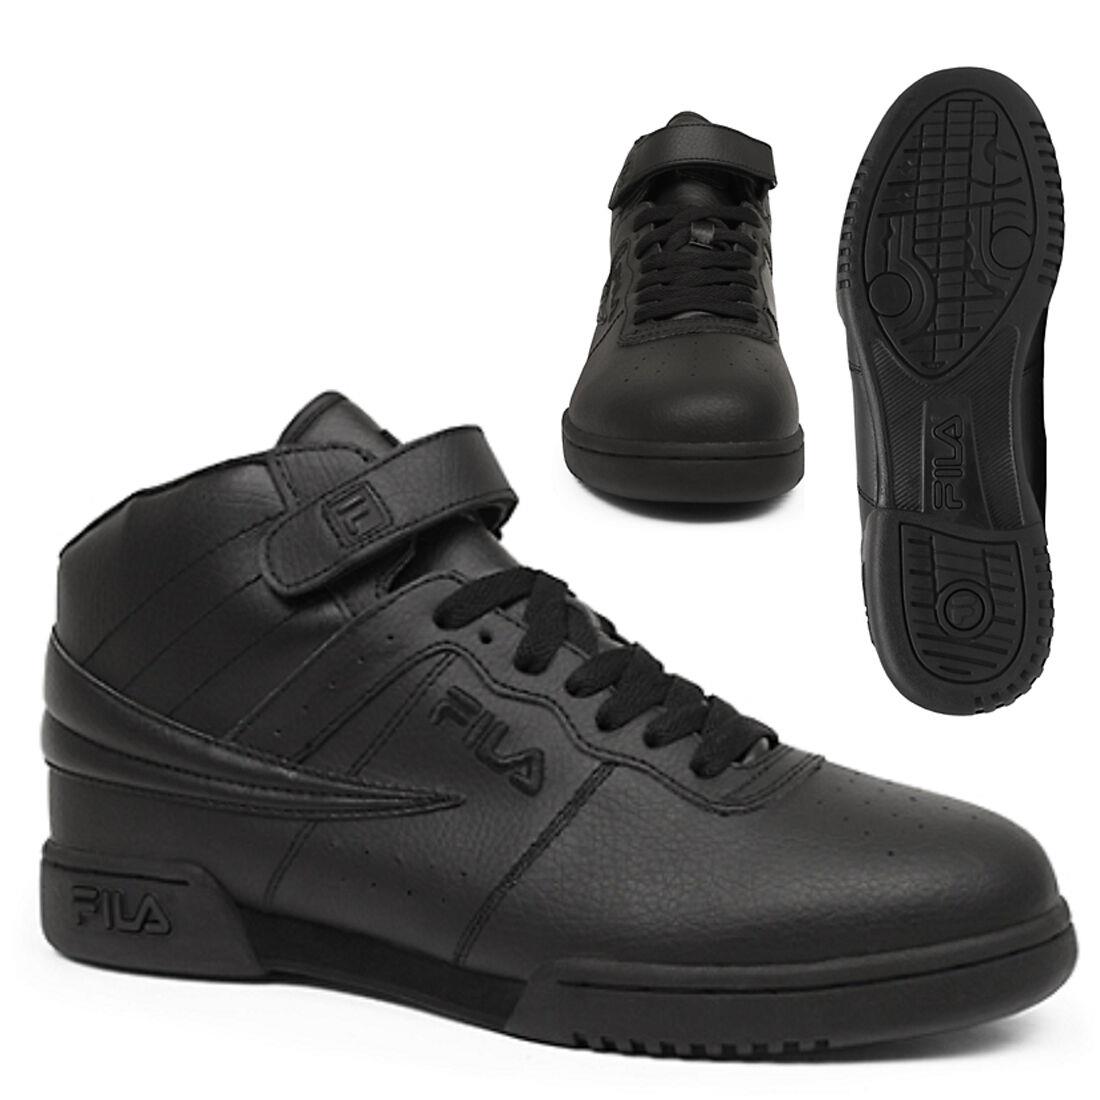 Mens Fila F13 F-13 Classic Mid High Top Basketball Shoes Sneakers White Black BLACK